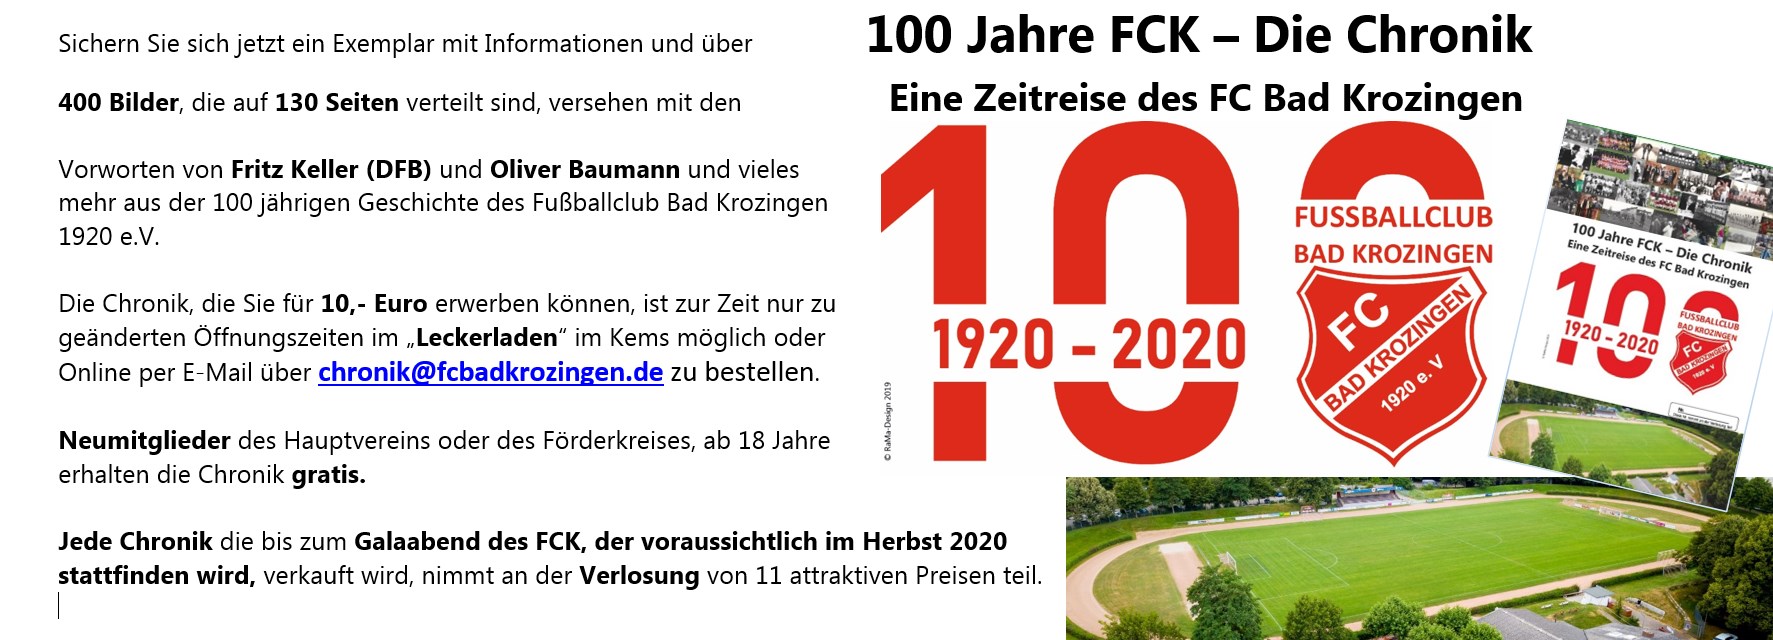 100_Jahre_FCK-Chronik-Homepage-09-05.jpg